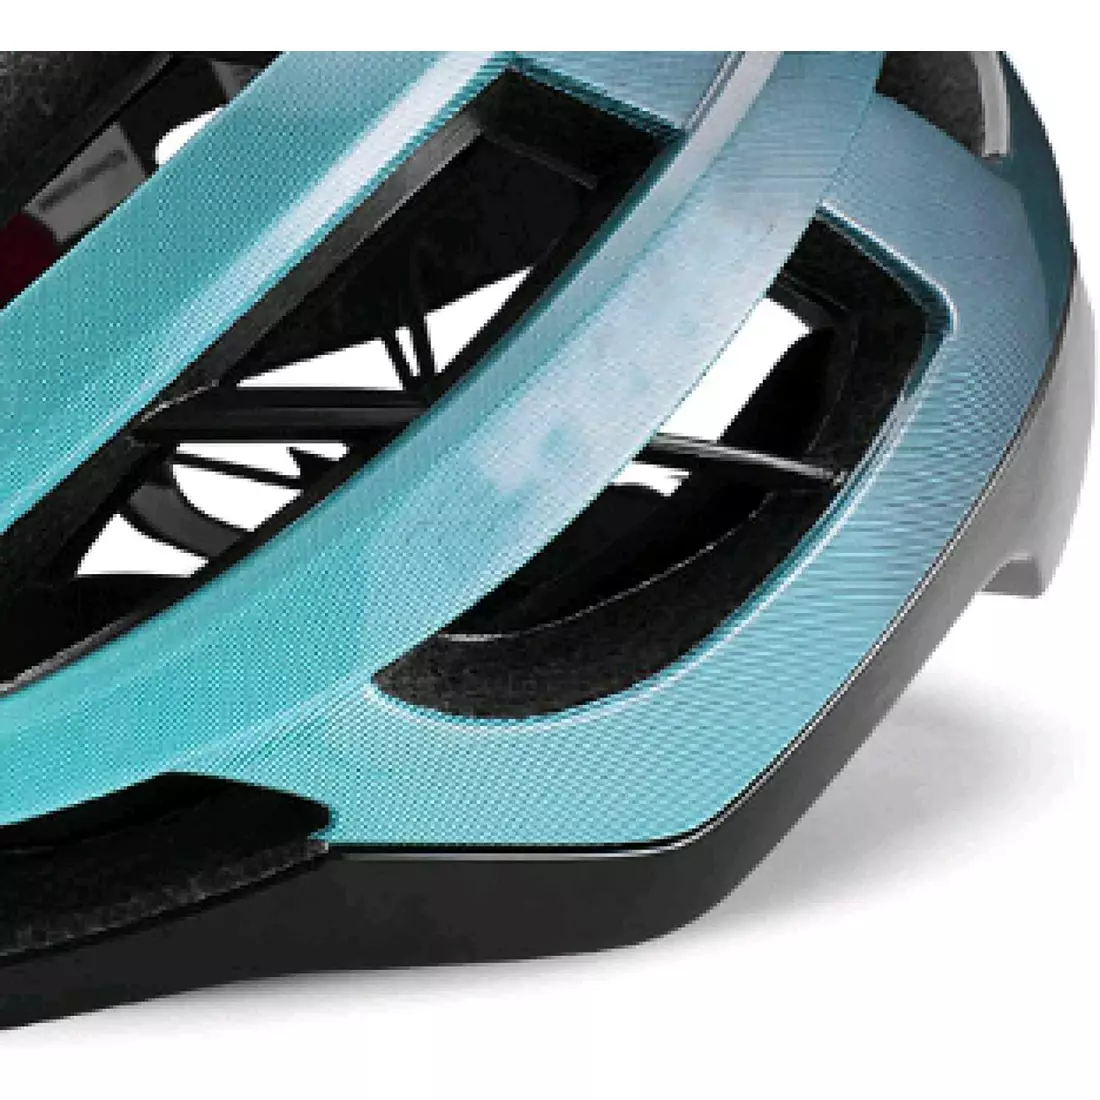 Rockbros Road bike helmet, turquoise HC-58LG